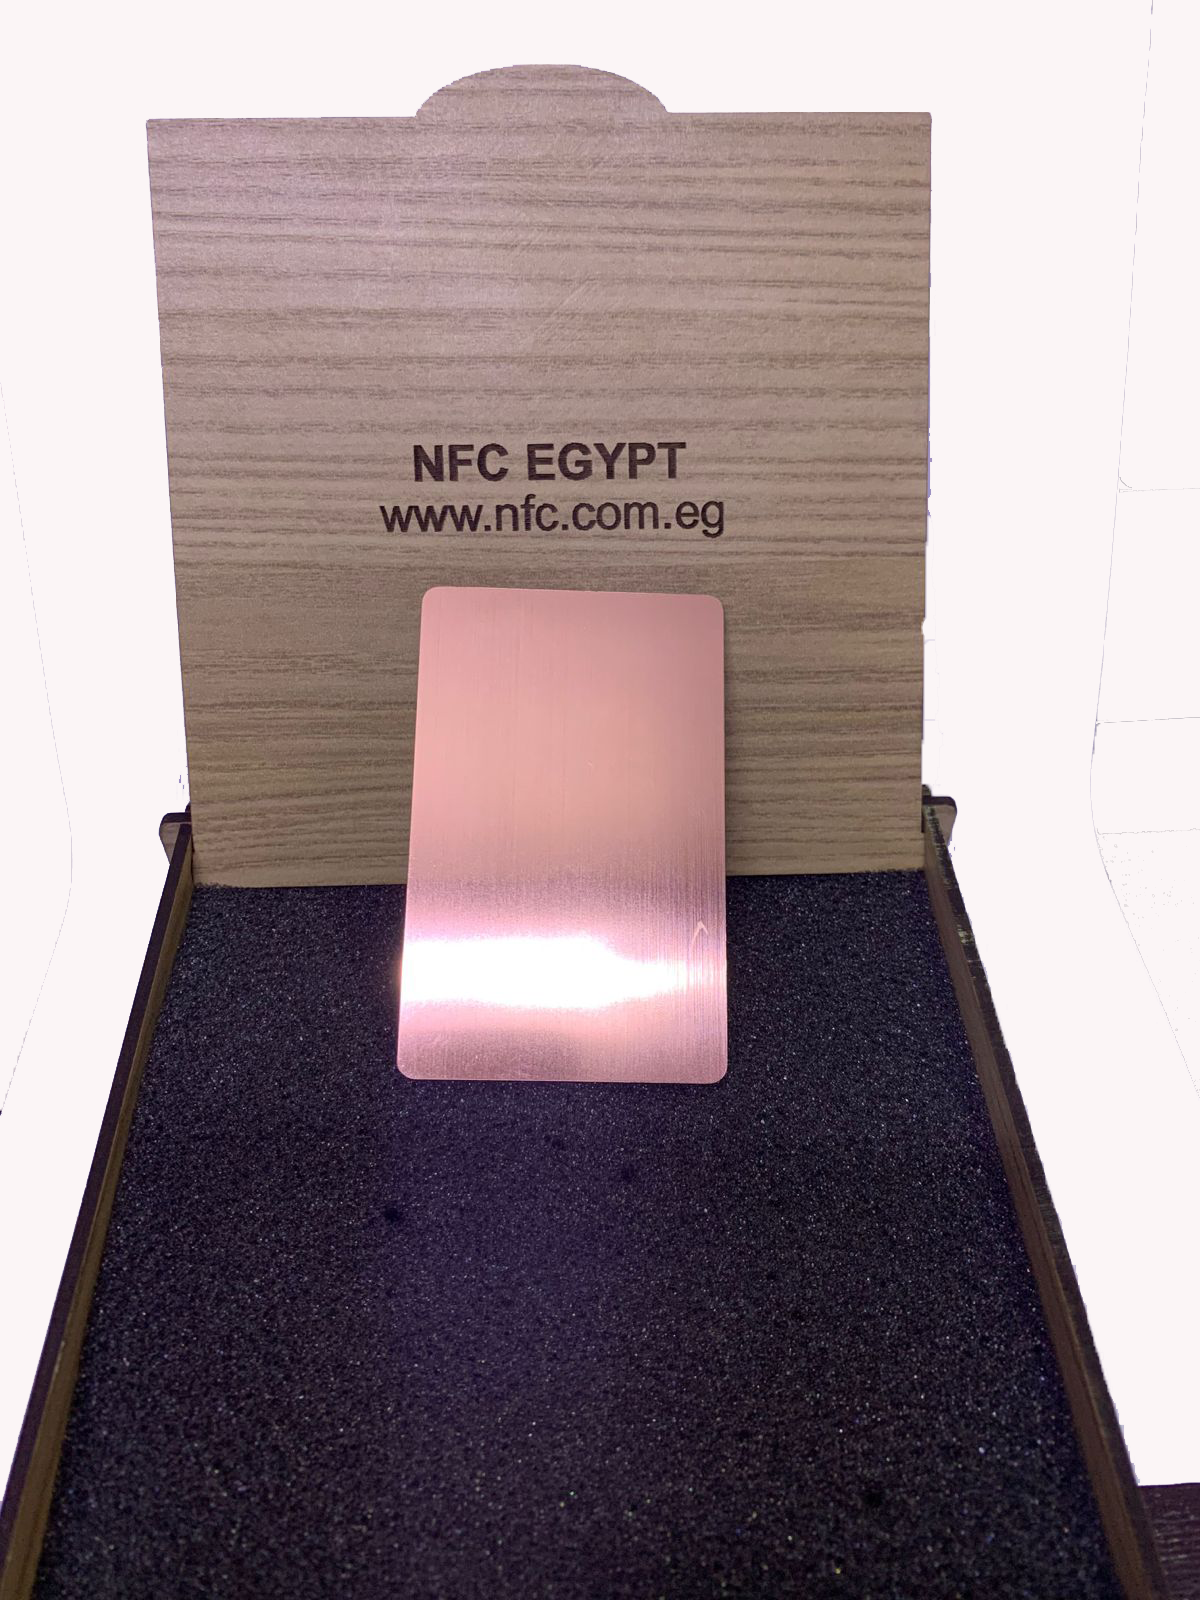 NFC Egypt Metal Card without slot model 215 original chip 2 sides metal (Rose)